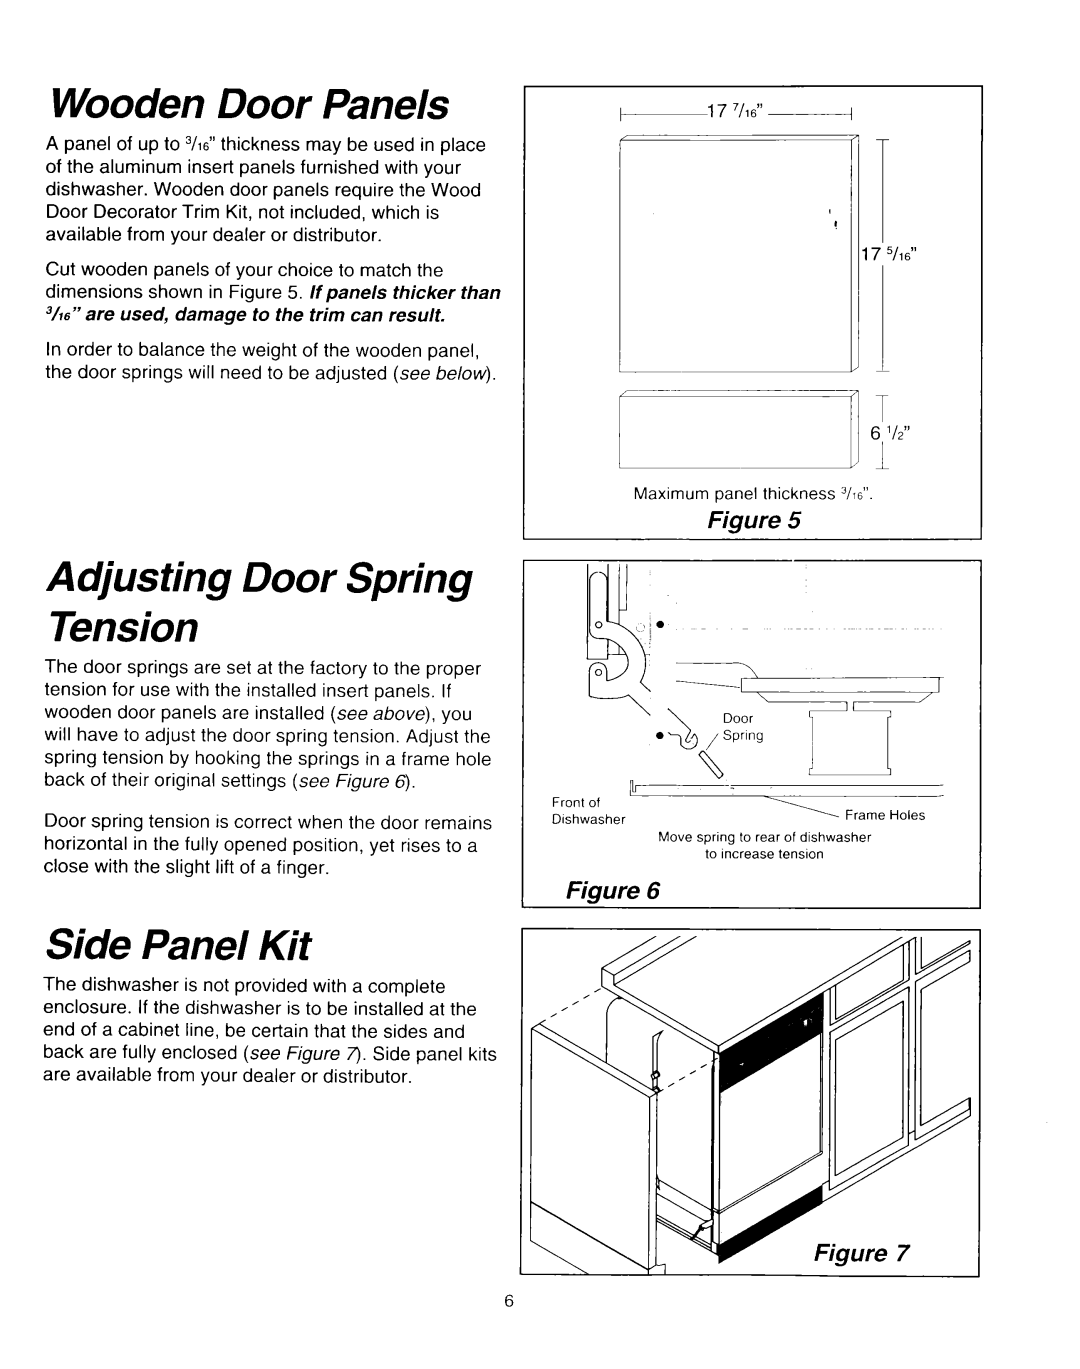 Whirlpool RUD0800EB installation instructions Wooden Door Panels, Adjusting Door Spring Tension, Side Panel Kit 